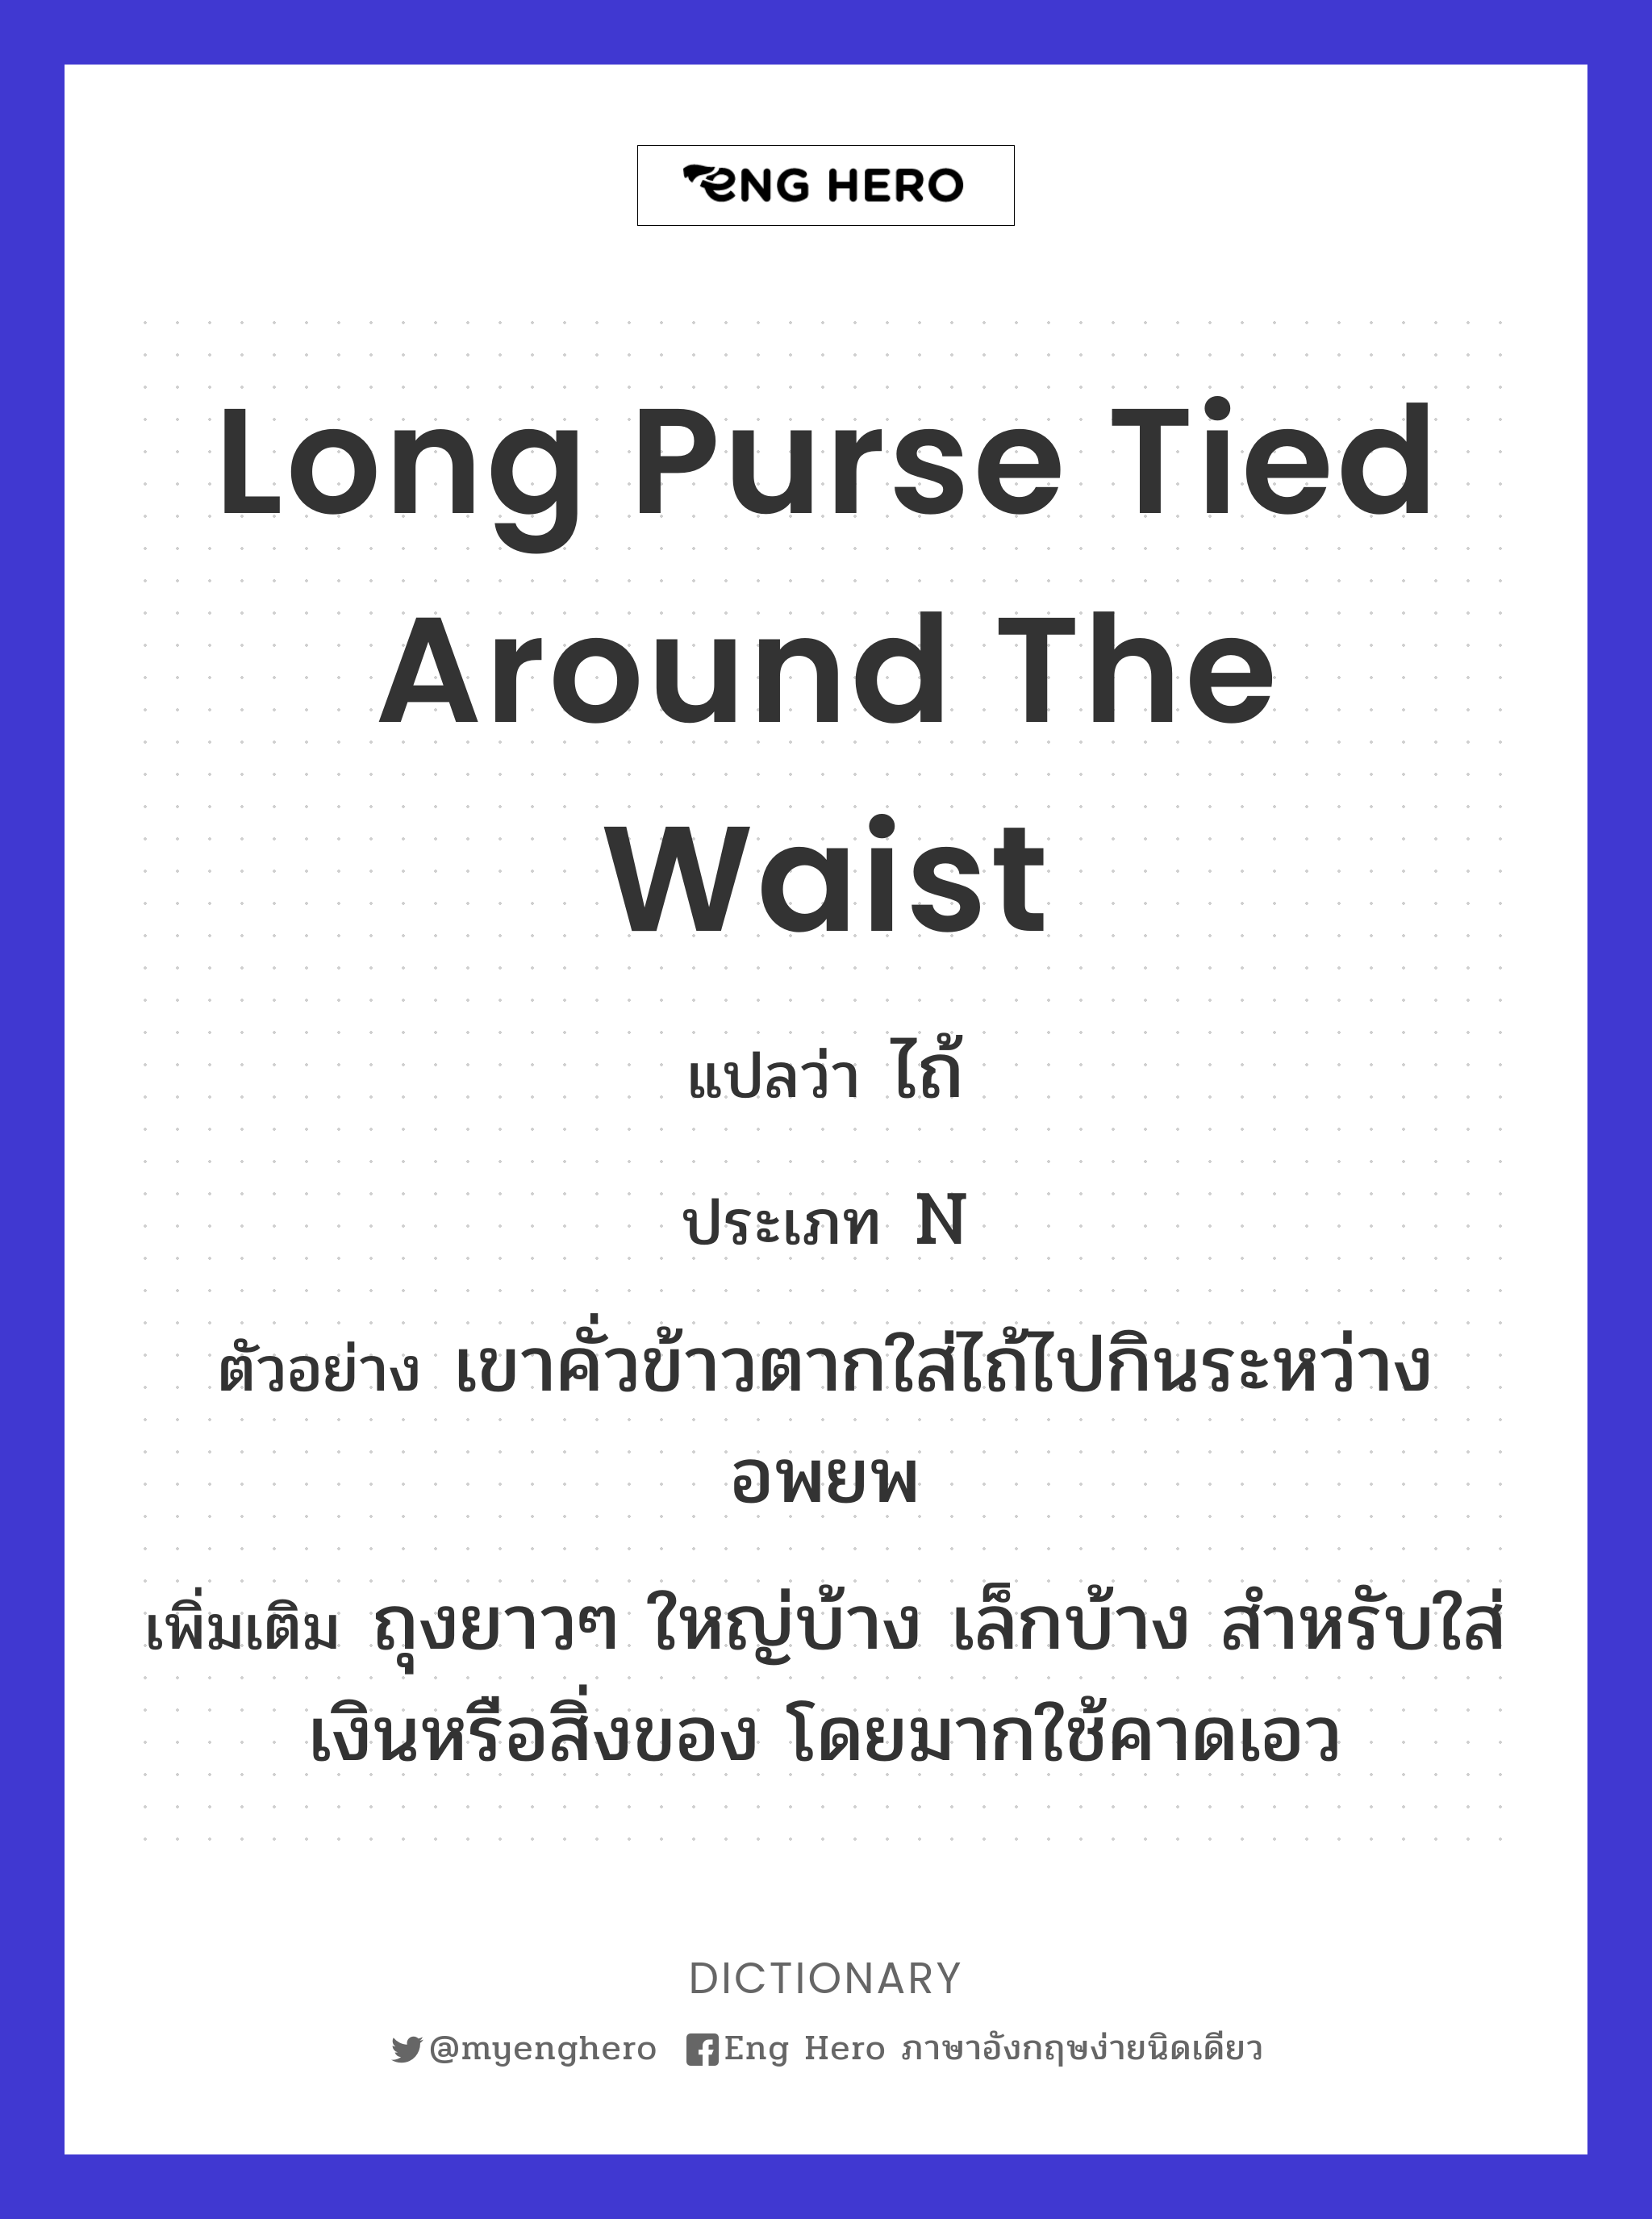 long purse tied around the waist